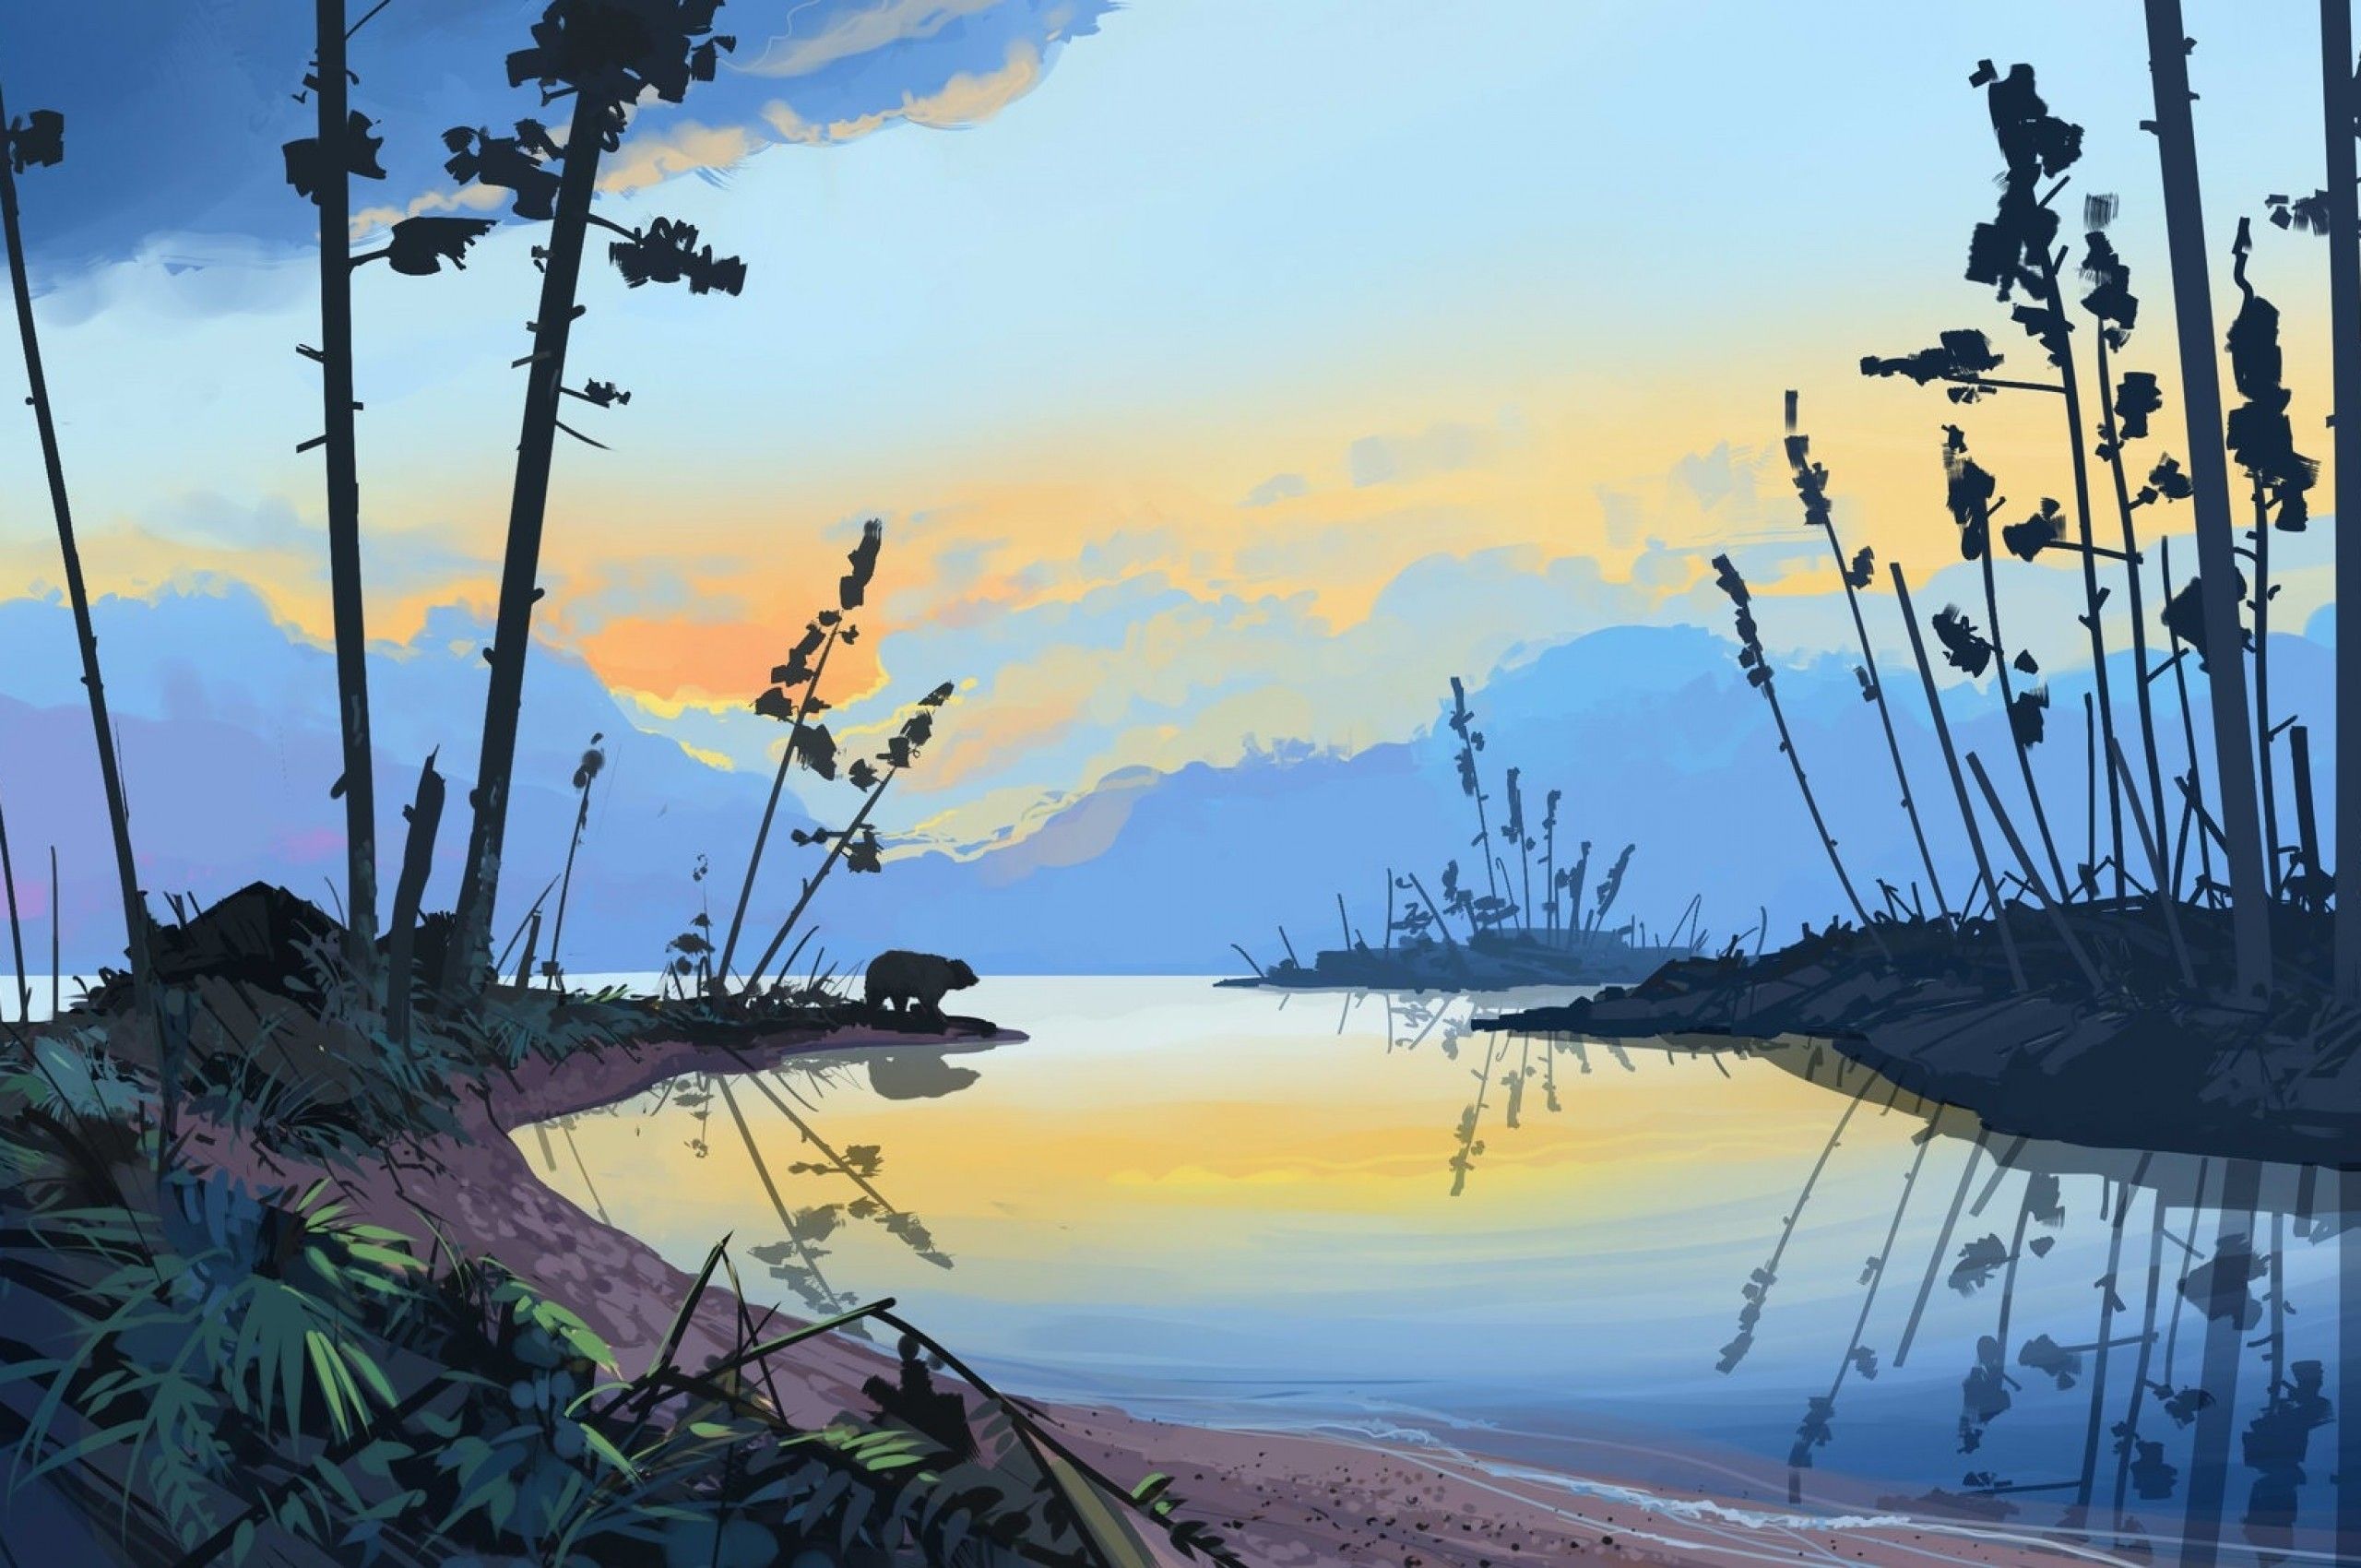 Download 2560x1700 Bear, Artwork, Scenic, Landscape, Illustration Wallpaper for Chromebook Pixel